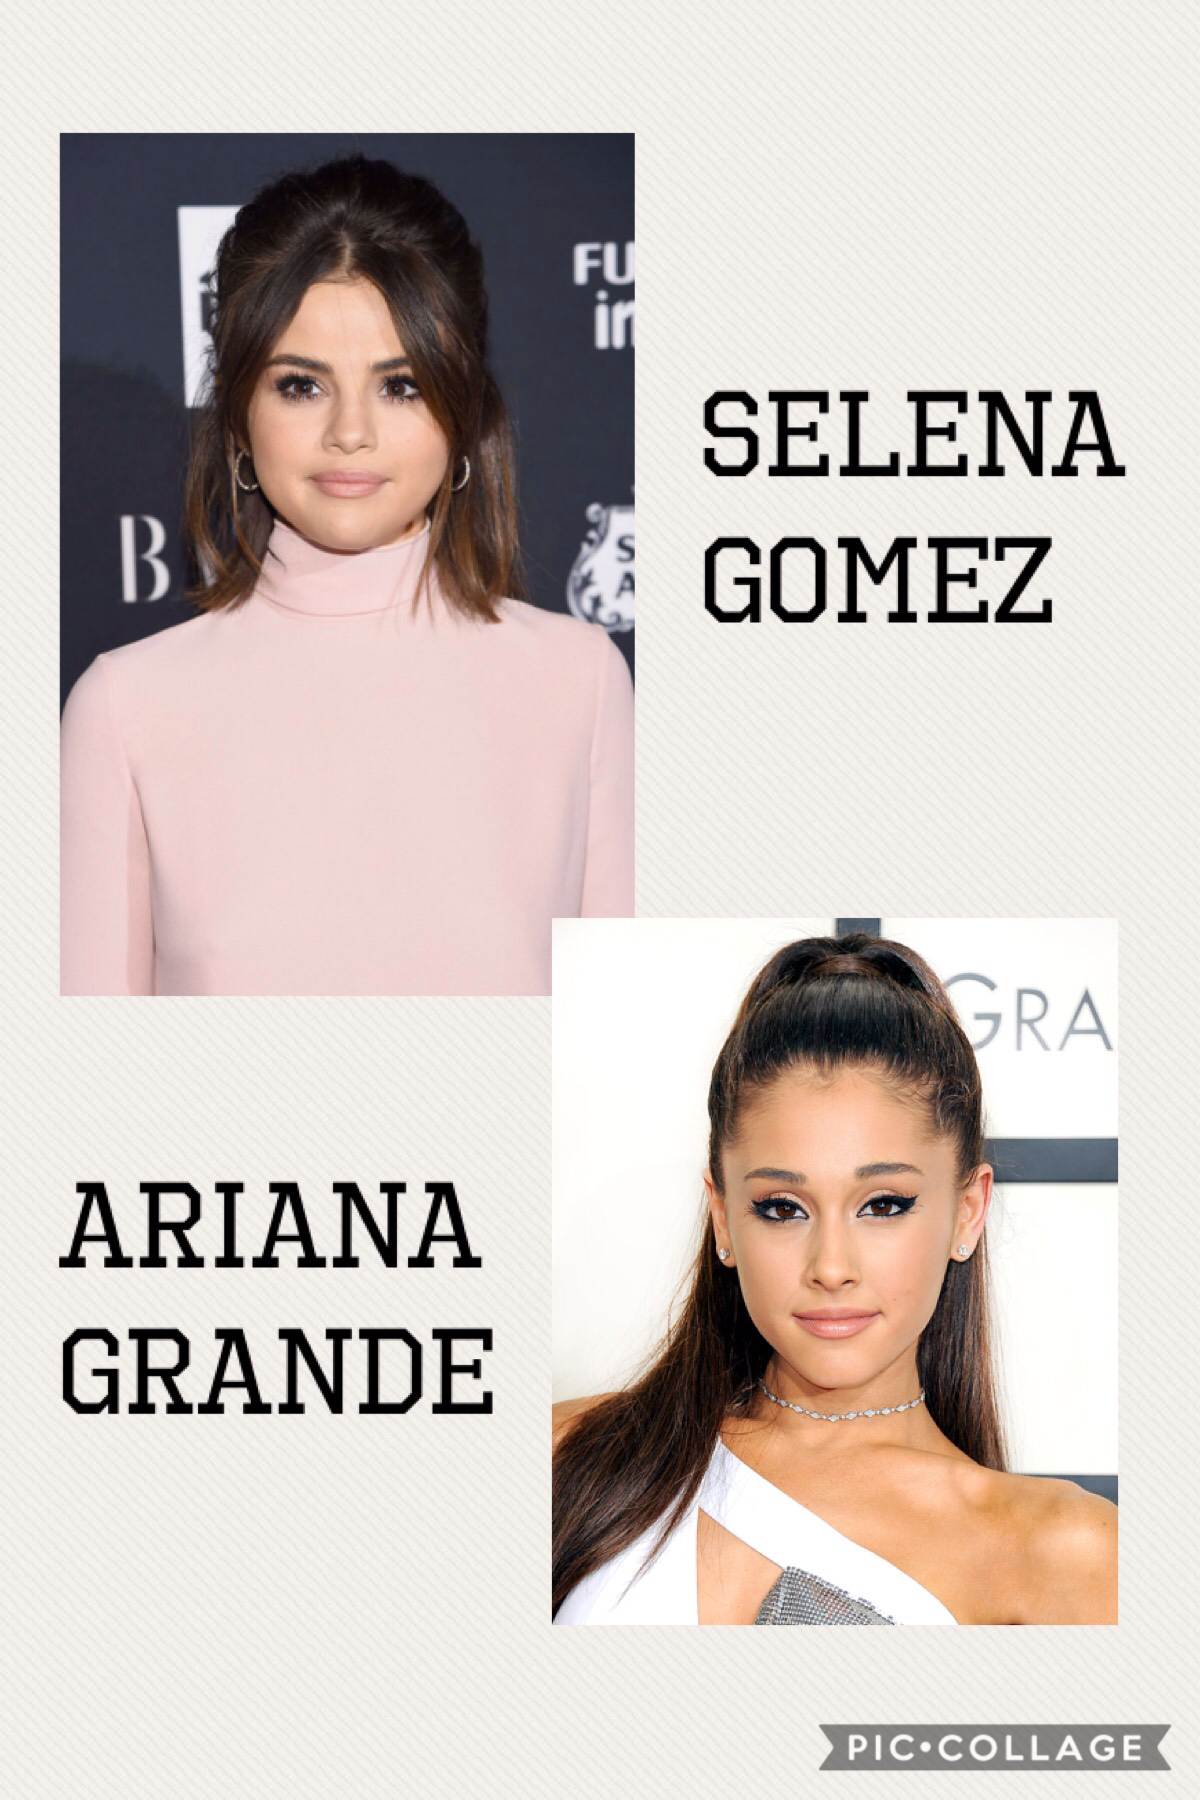 Ariana Grande or Selena Gomez???